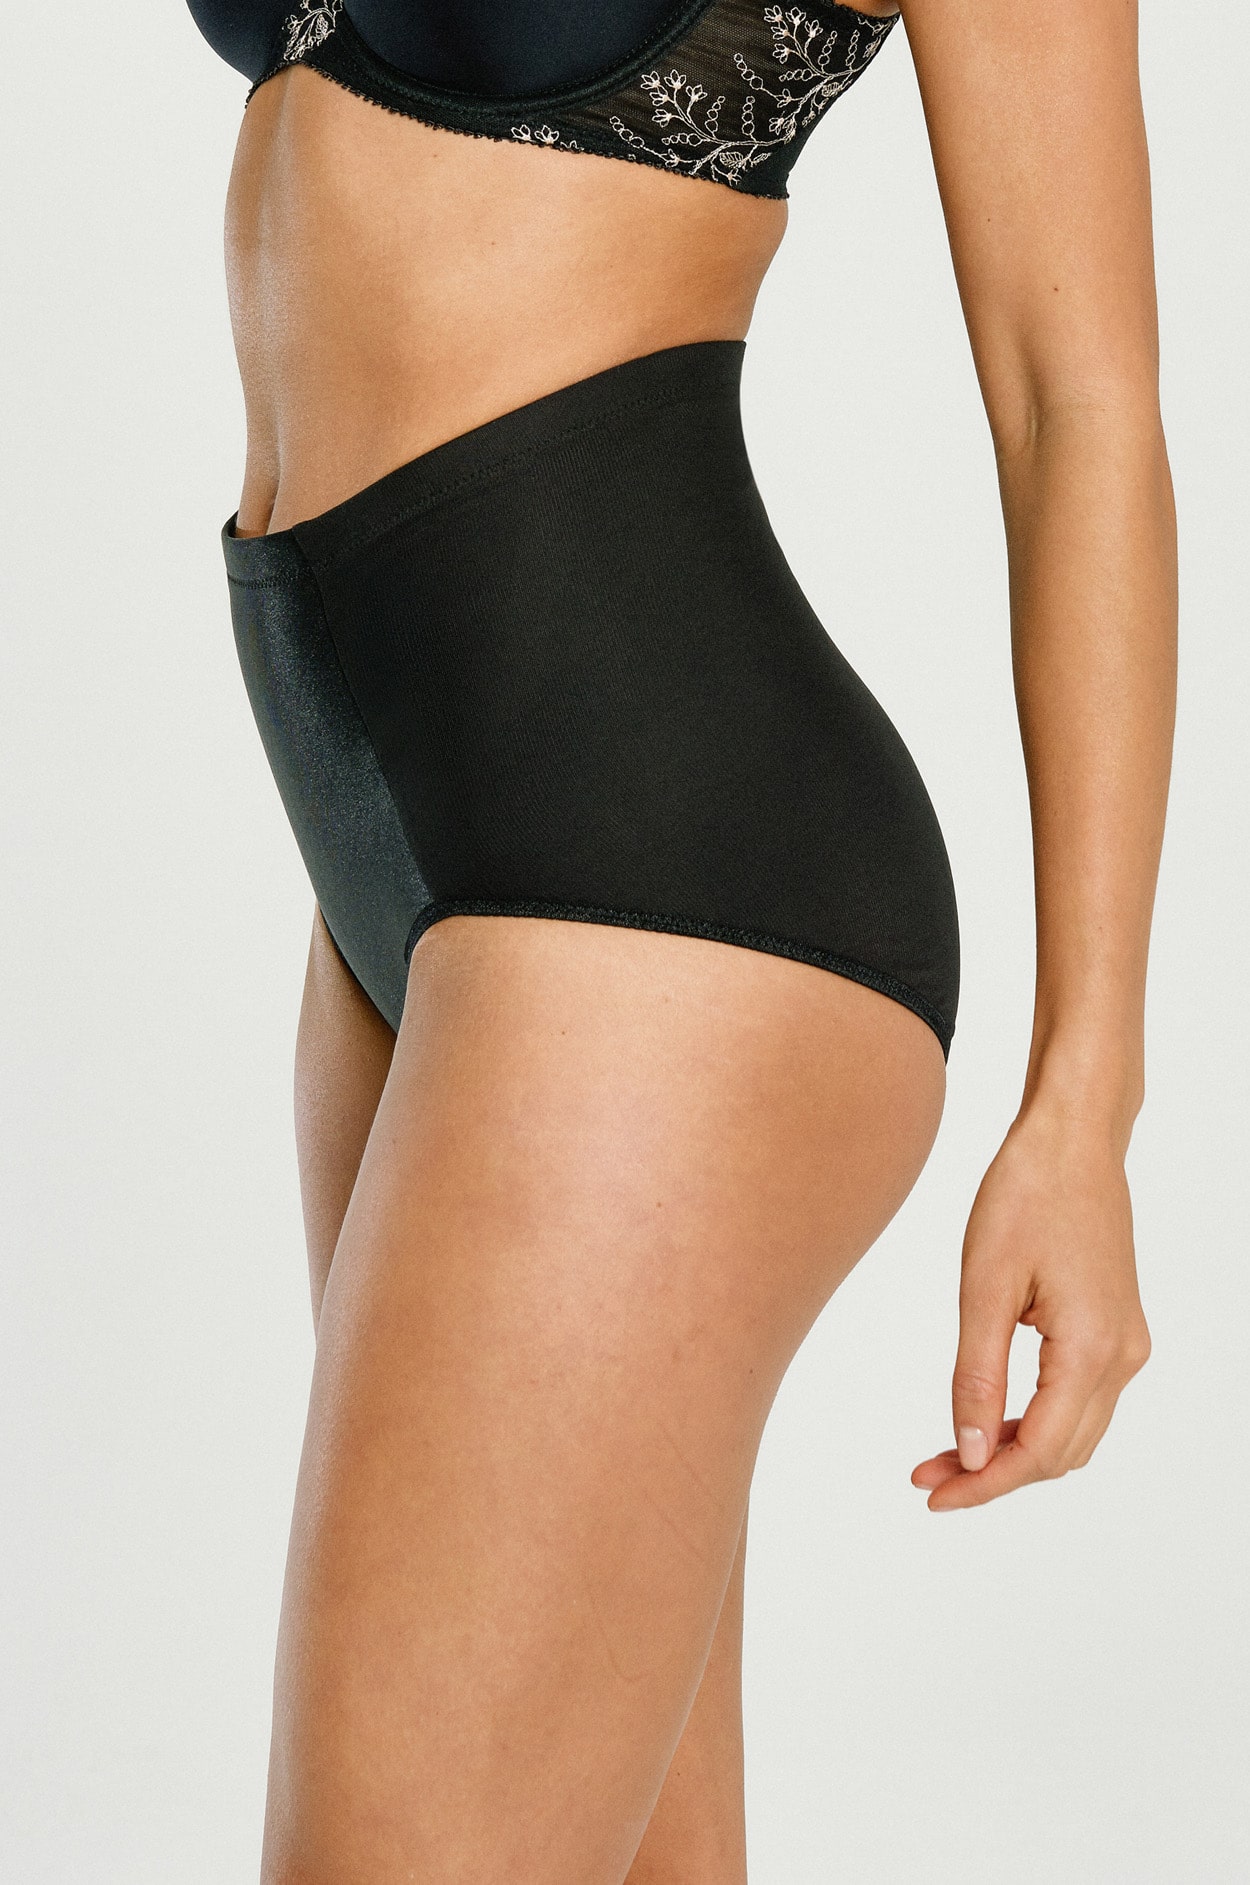 Lace satin underwear panties for black bodysuit shaper